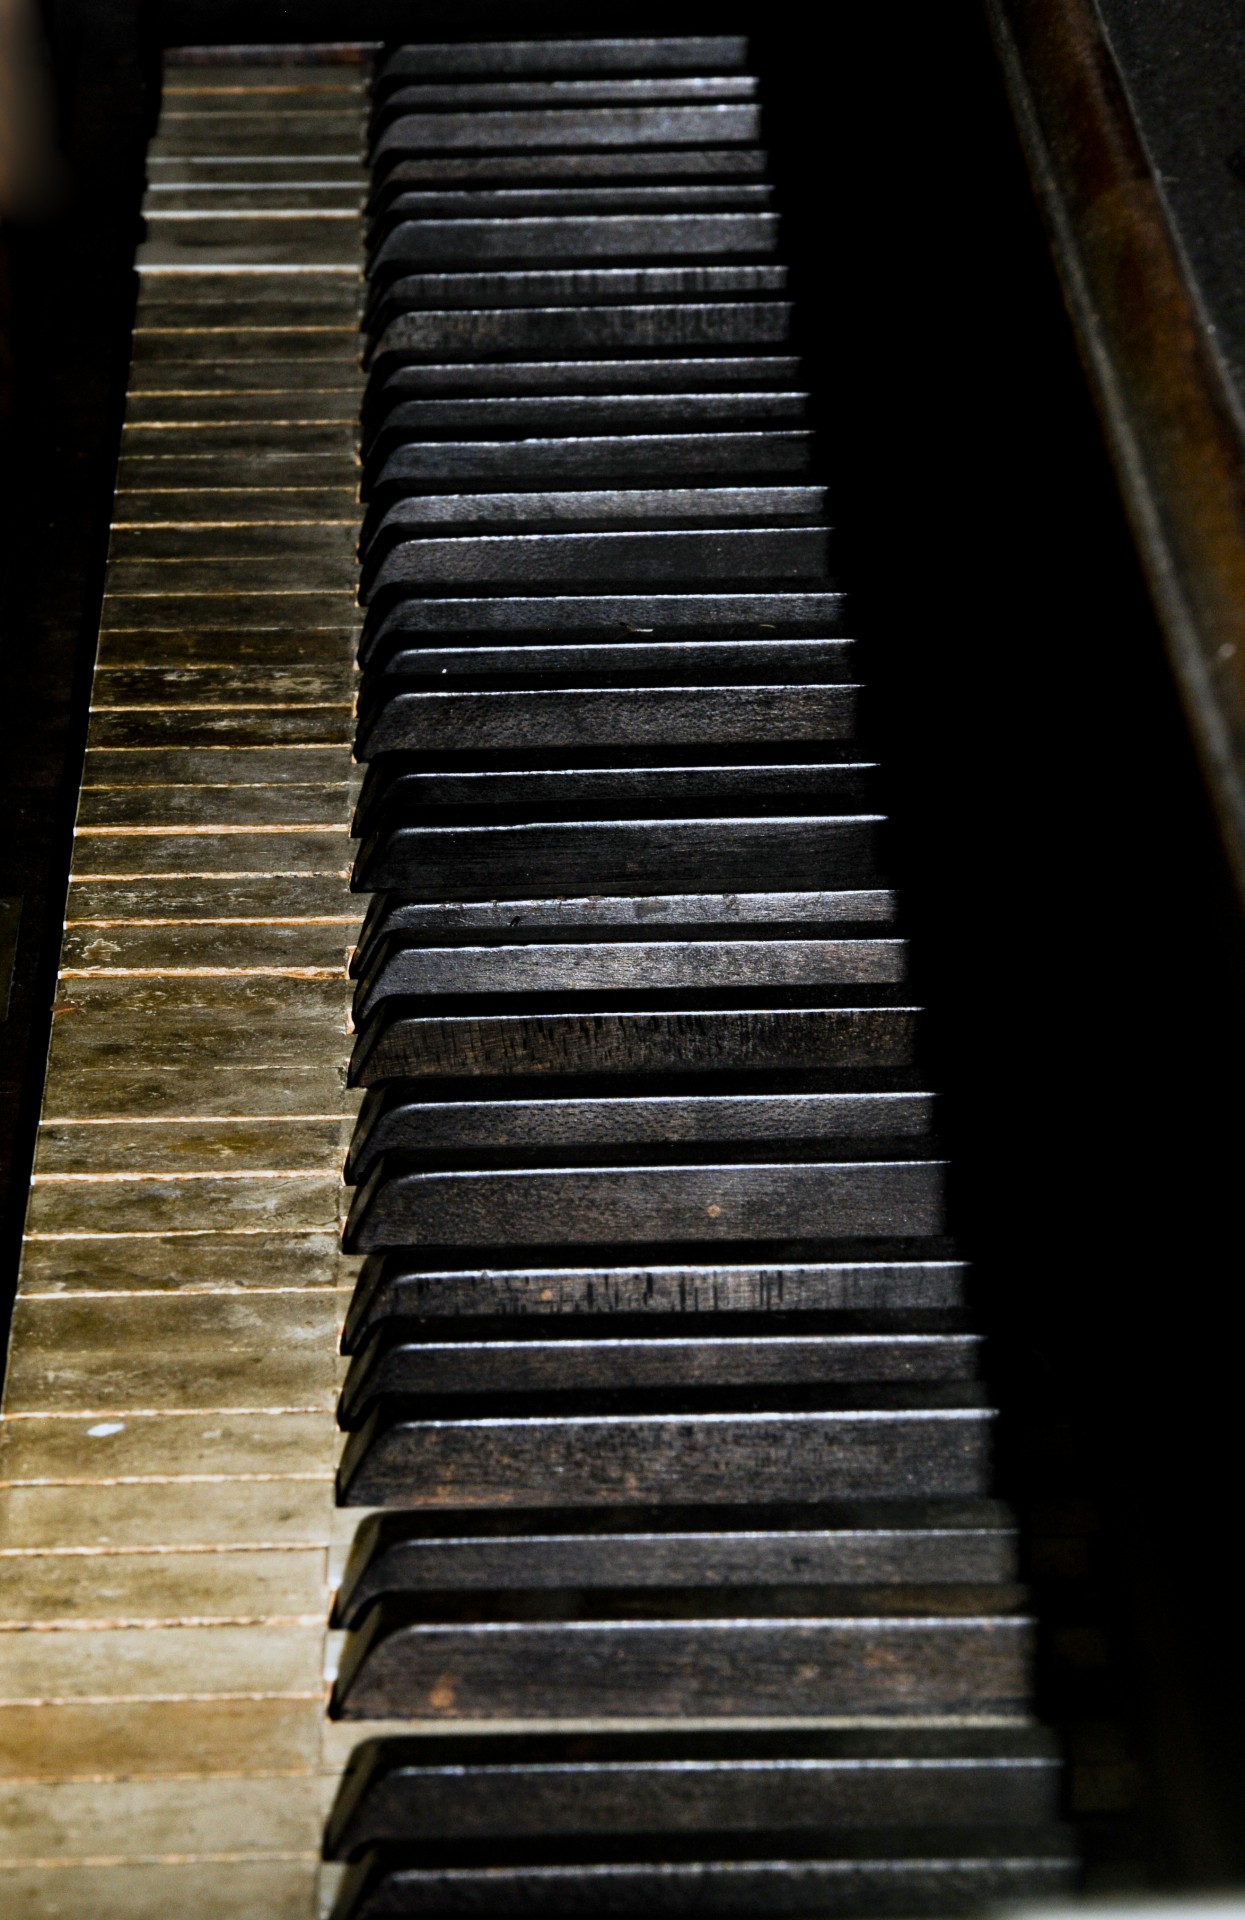 Vintage Piano Keys